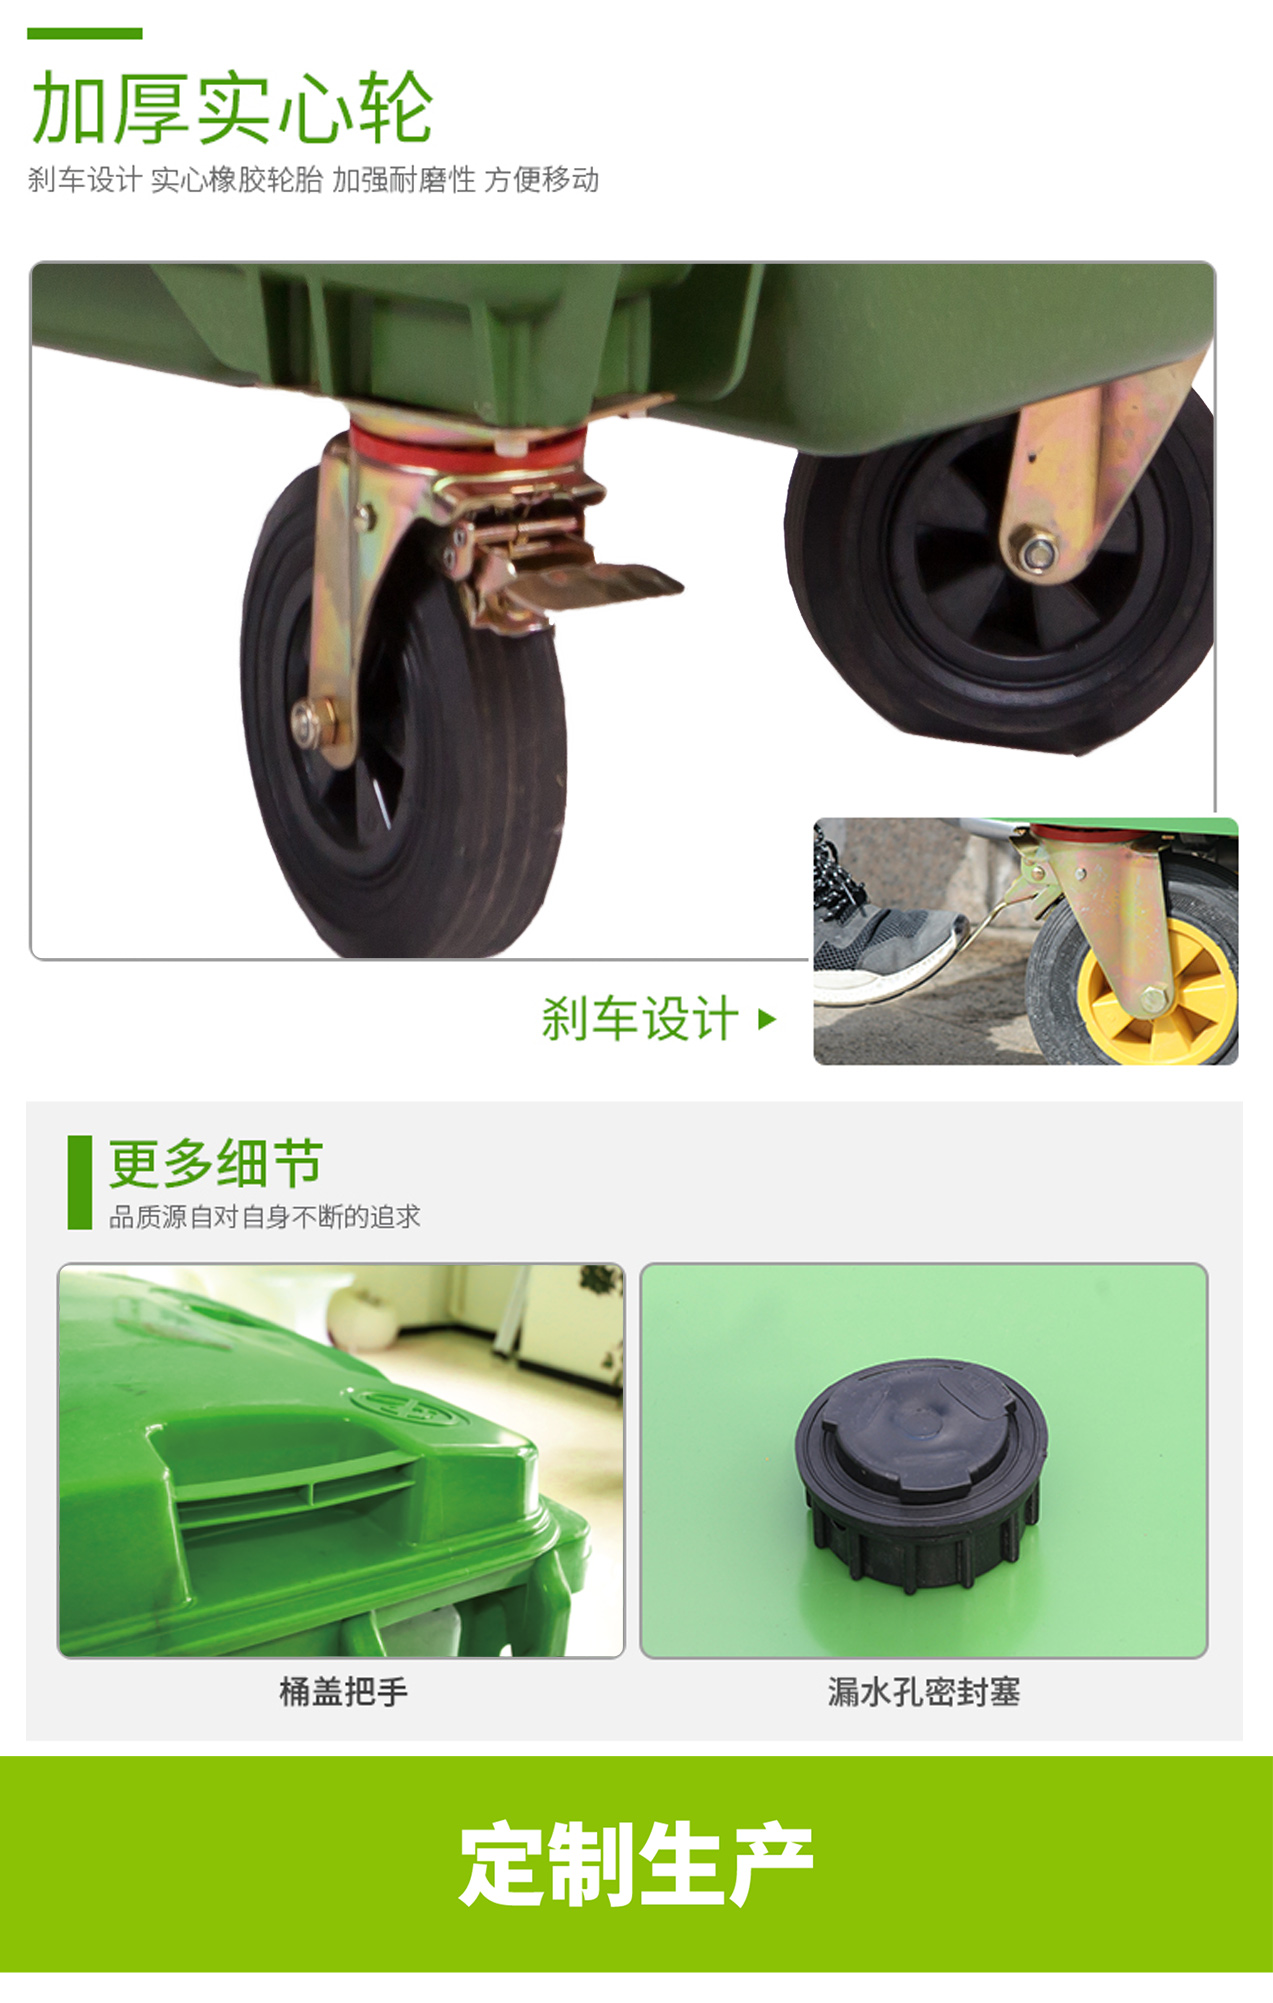 leyu·(中国)官方网站贵州遵义村庄城镇环卫垃圾桶垃圾桶规格型号(图2)